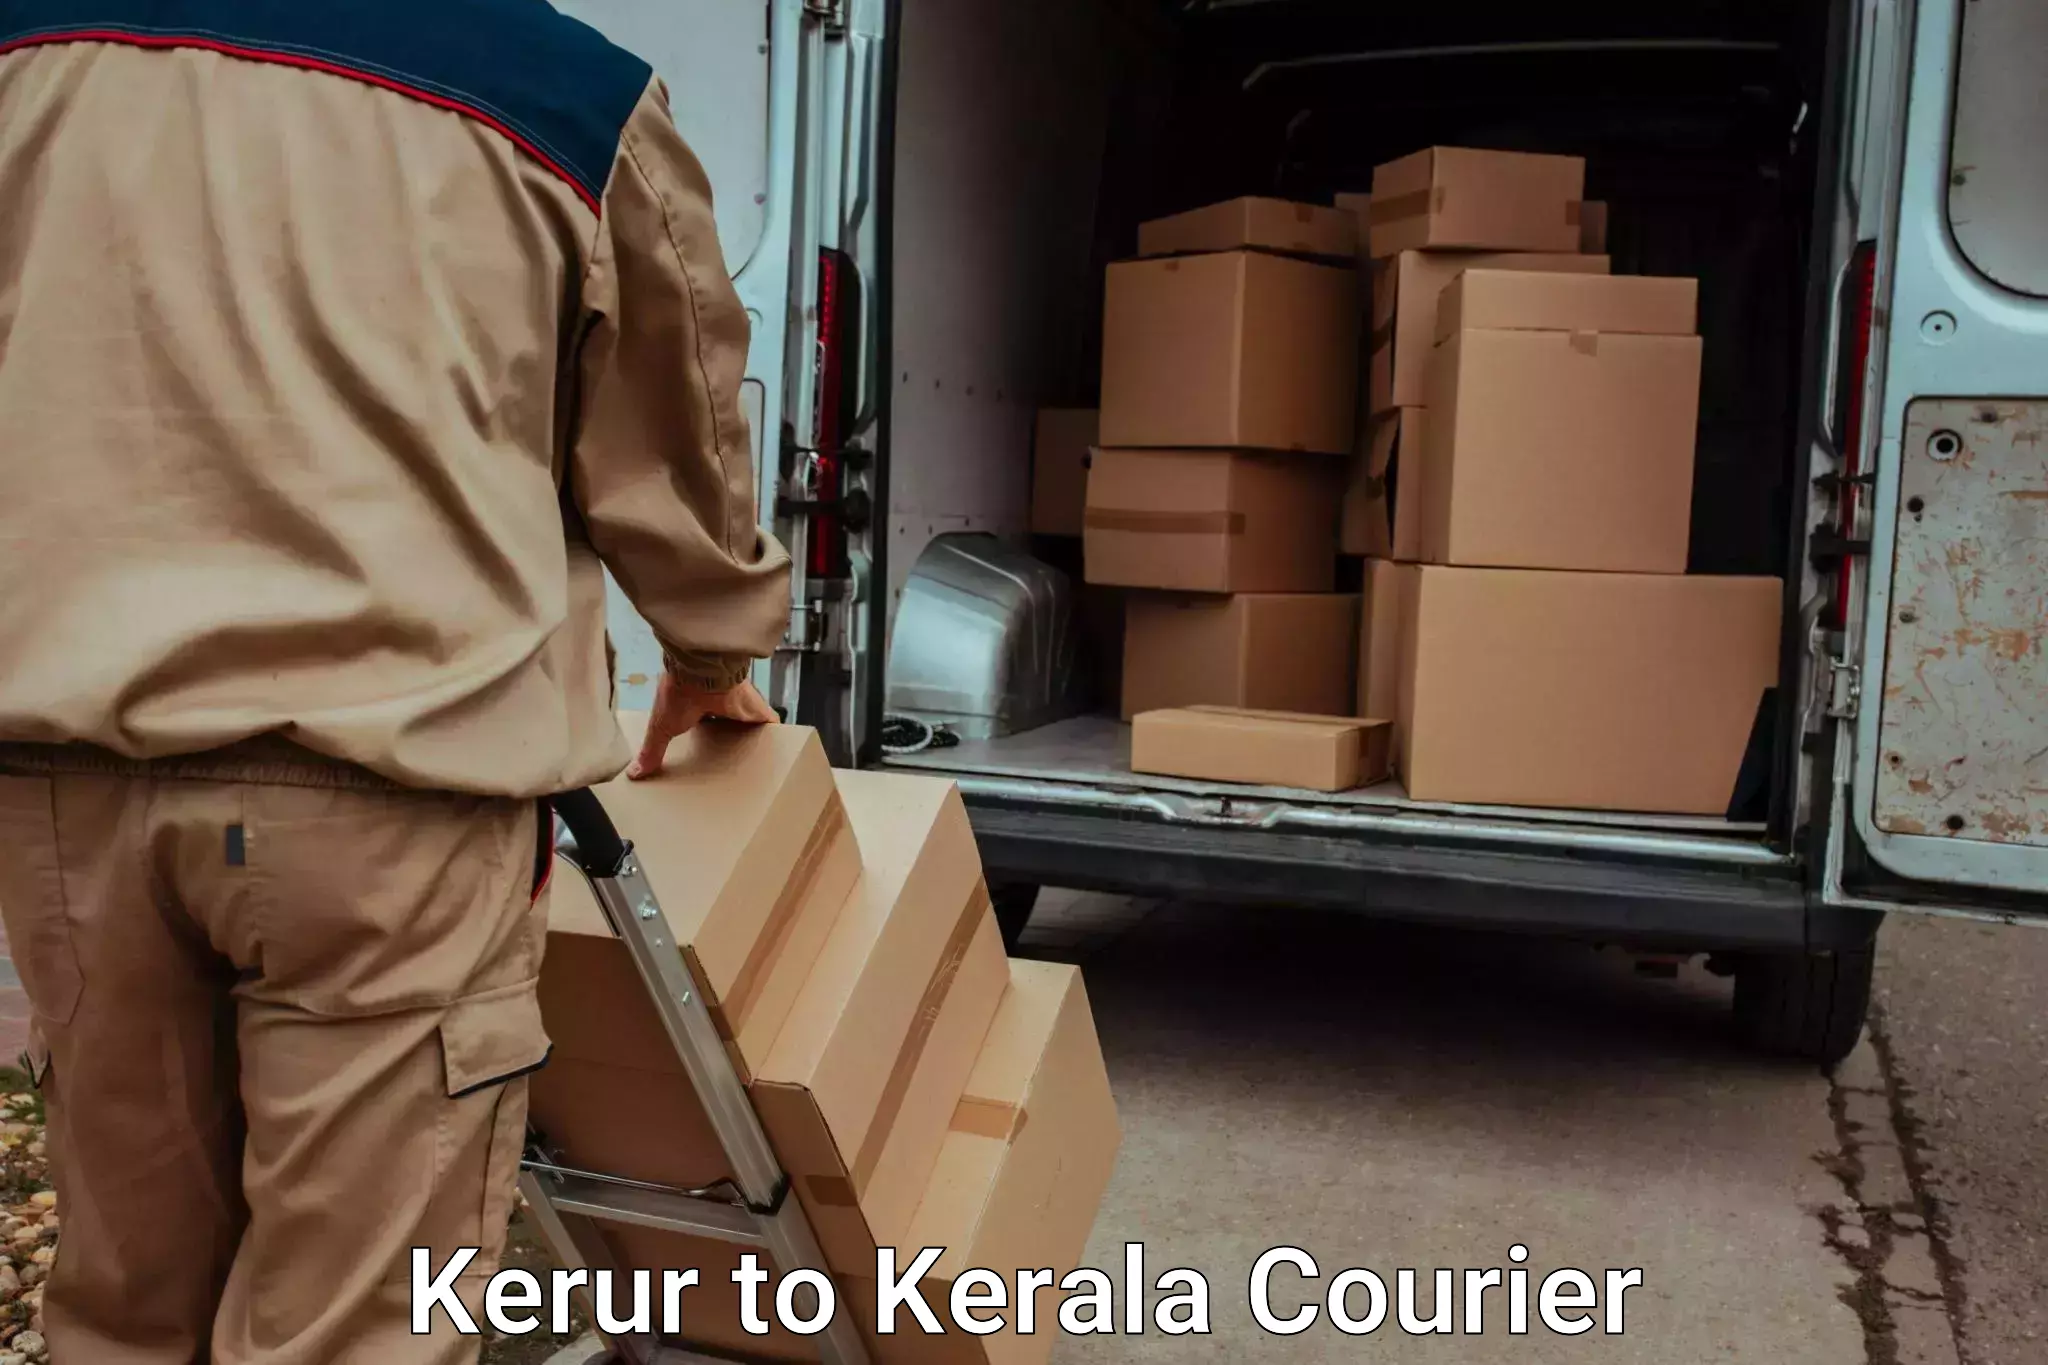 Nationwide furniture movers Kerur to Kattappana